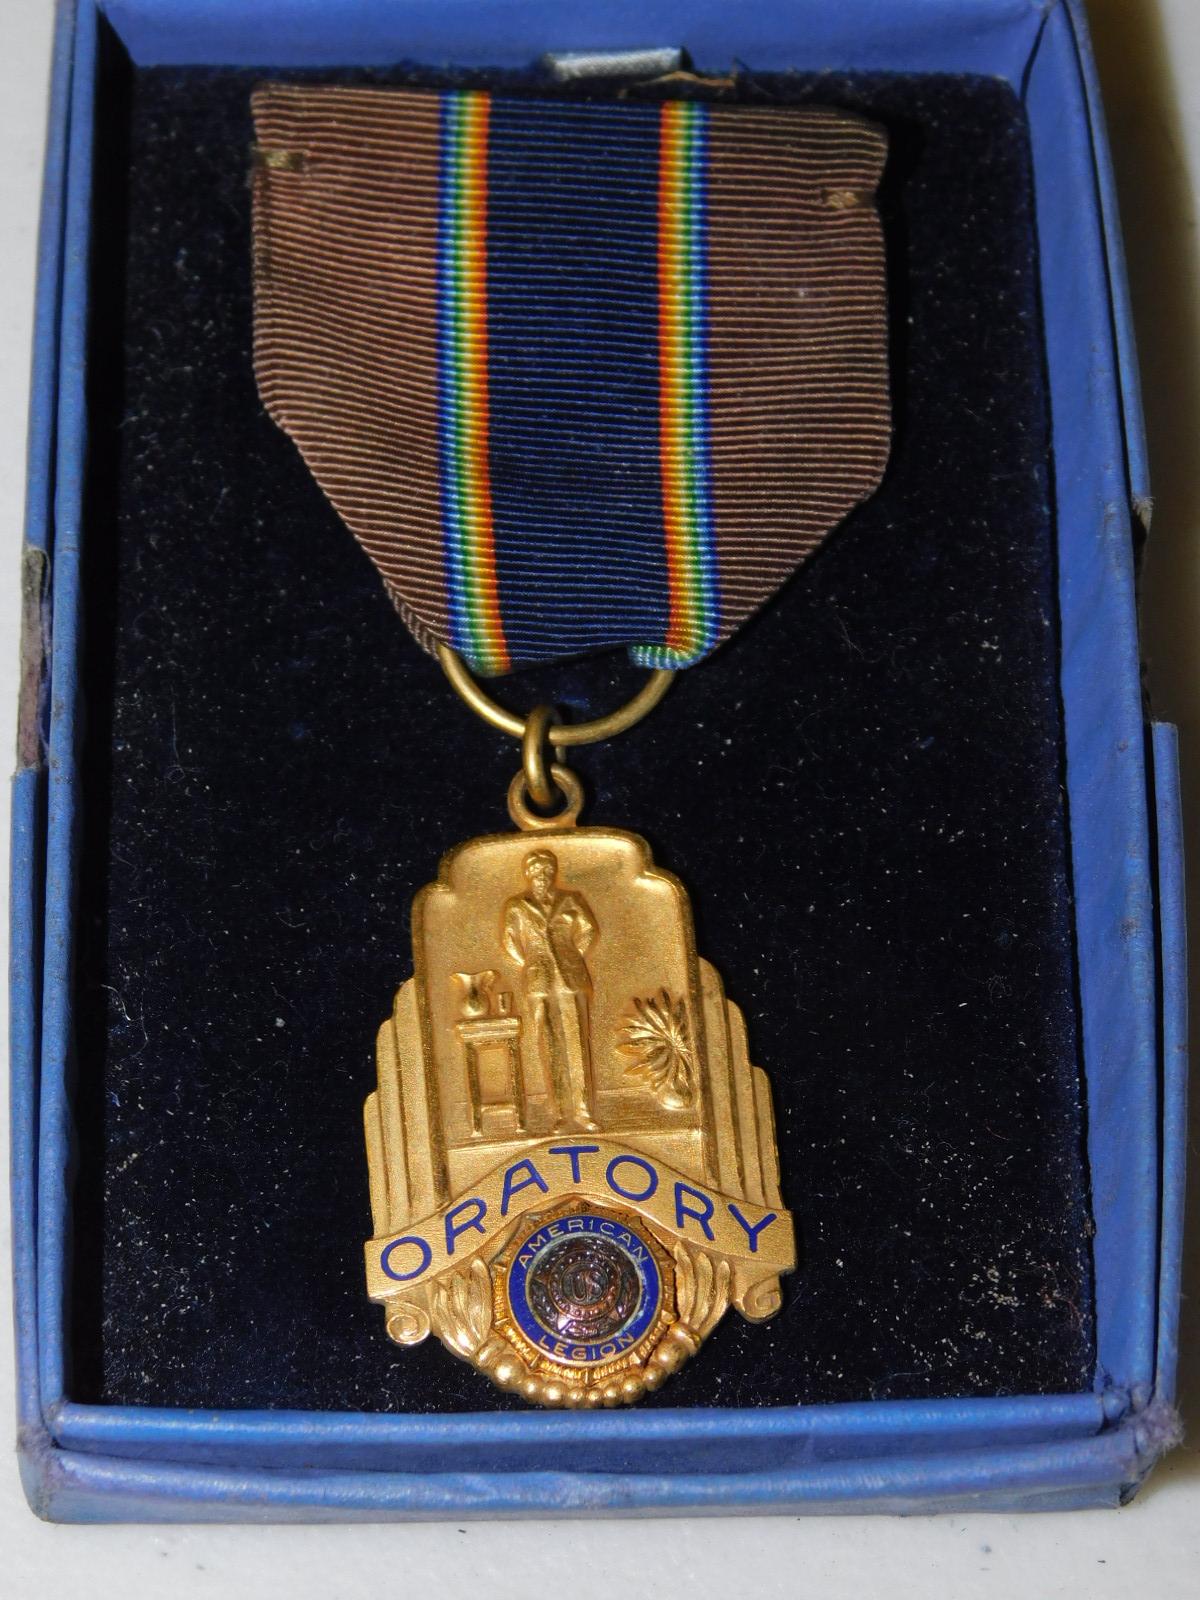 1/10 10 K. Gold Filled 1948 Clinton H. S. Oratory Medal